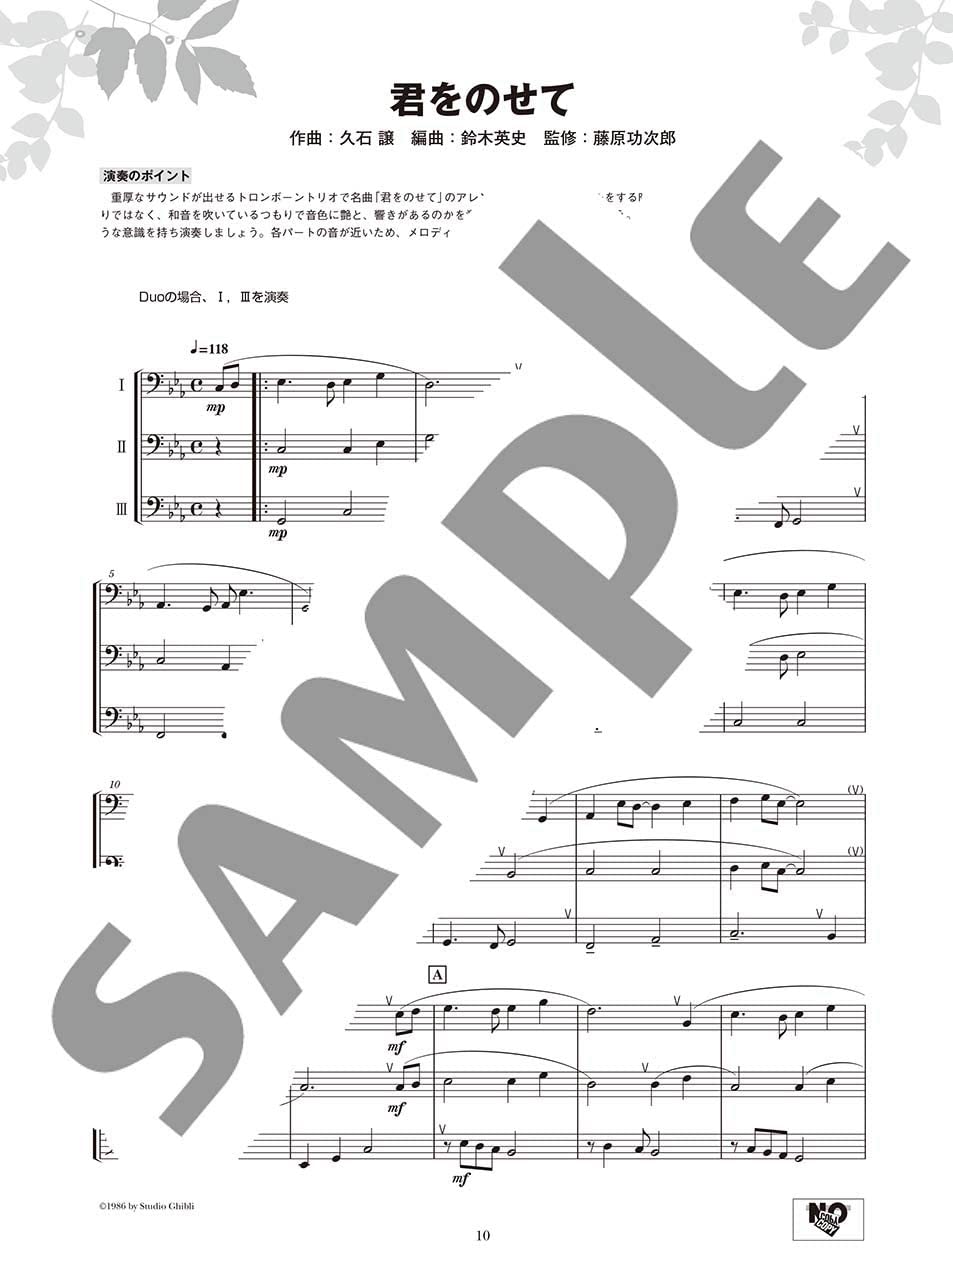 Ensemble de Studio Ghibli: Trombone Ensemblede(Pre-Intermediate) Sheet Music Book